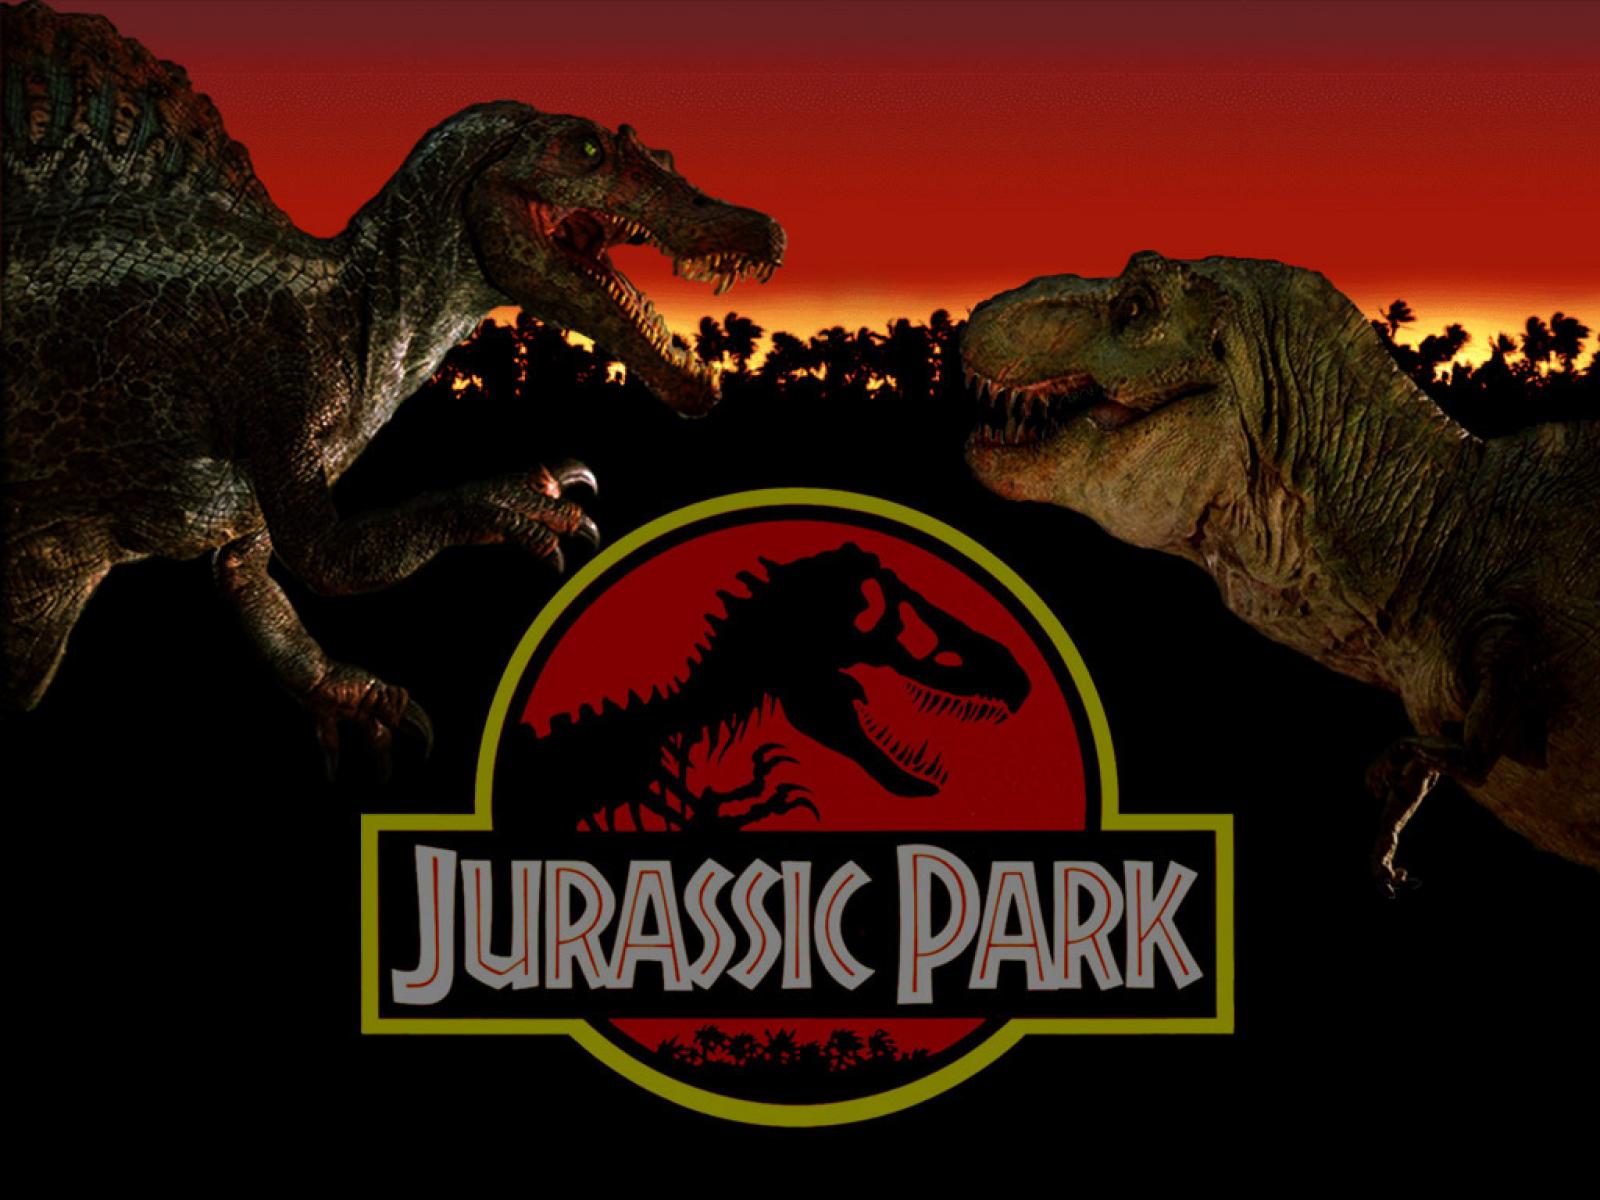 Jurassic Park Full HD Widescreen wallpapers for desktop